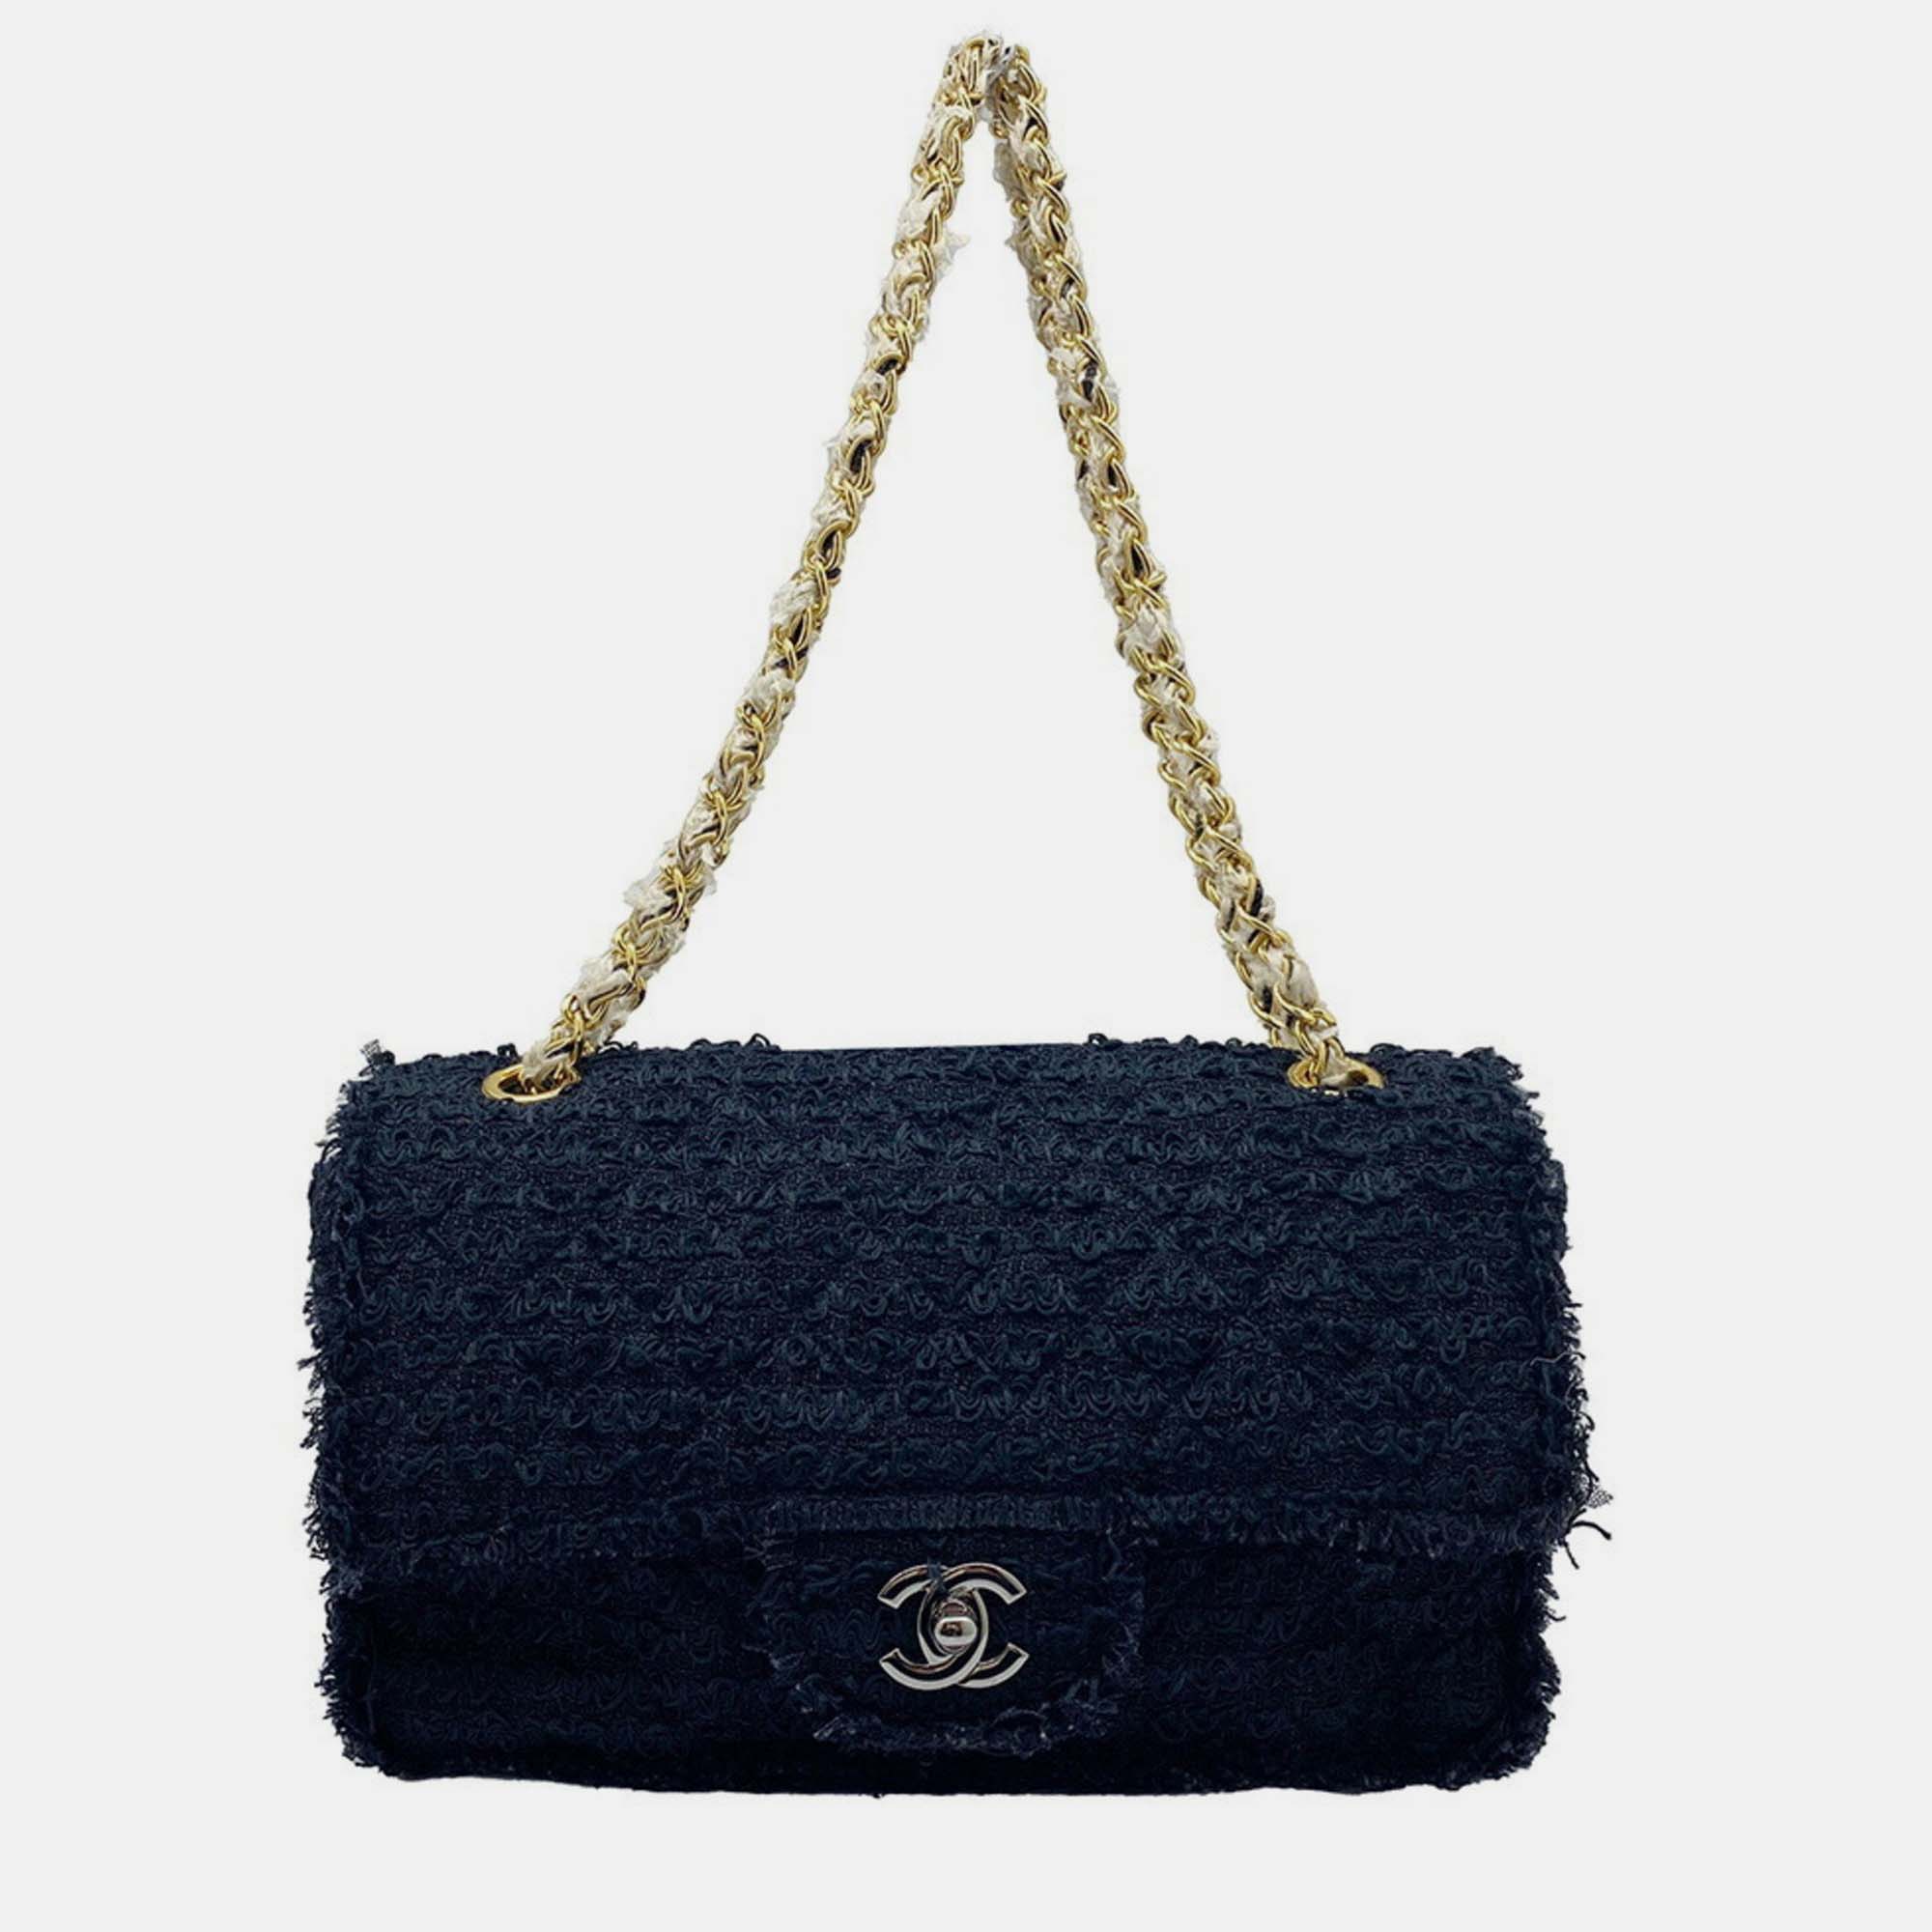 Chanel black tweed matelasse medium single flap shoulder bag